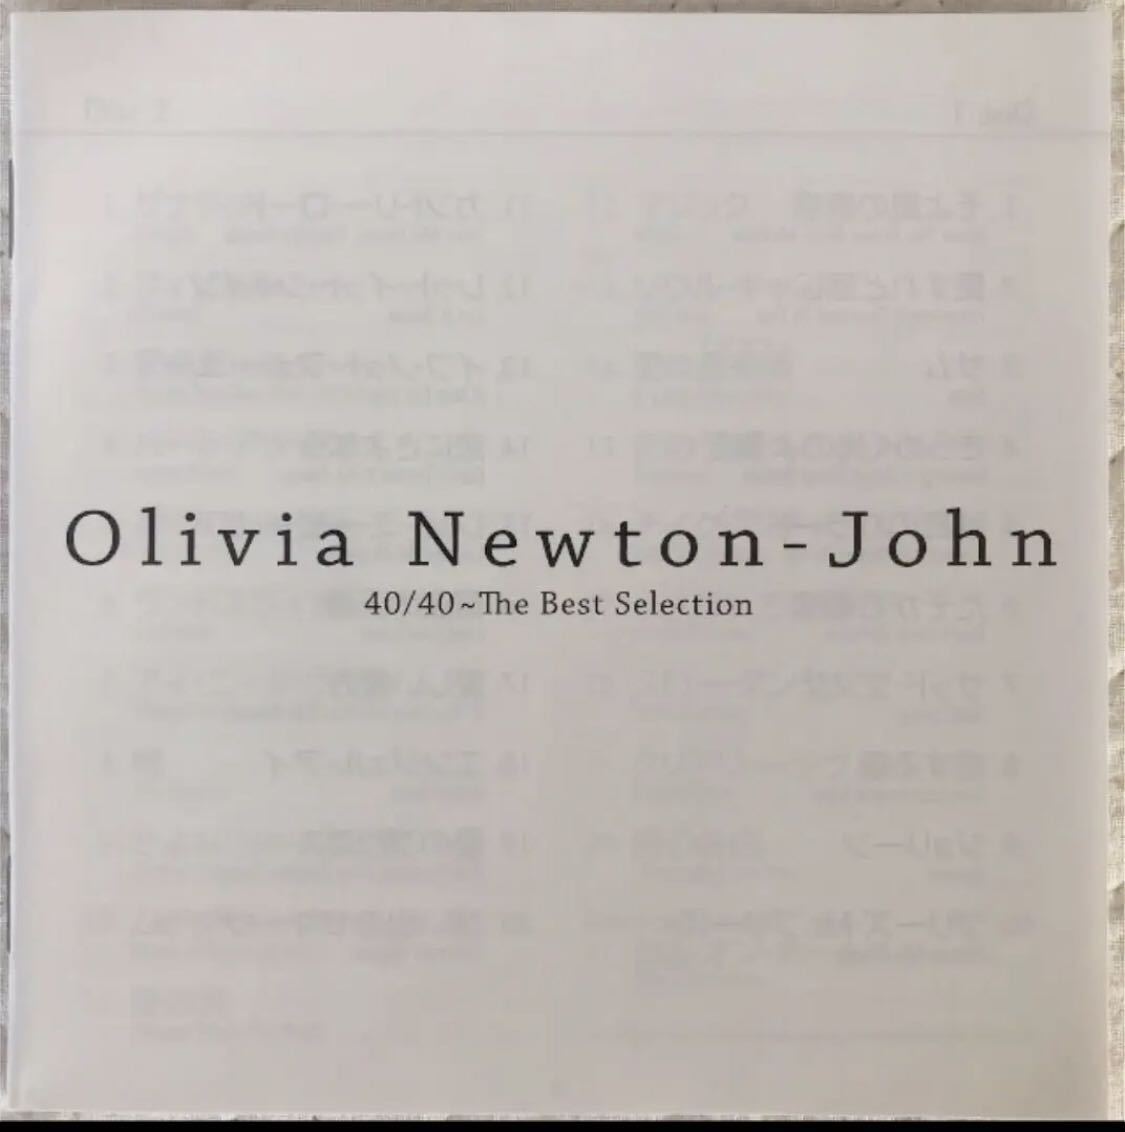 2 SHM-CD！帯付き！国内盤！Olivia Newton-John 40/40 - BEST